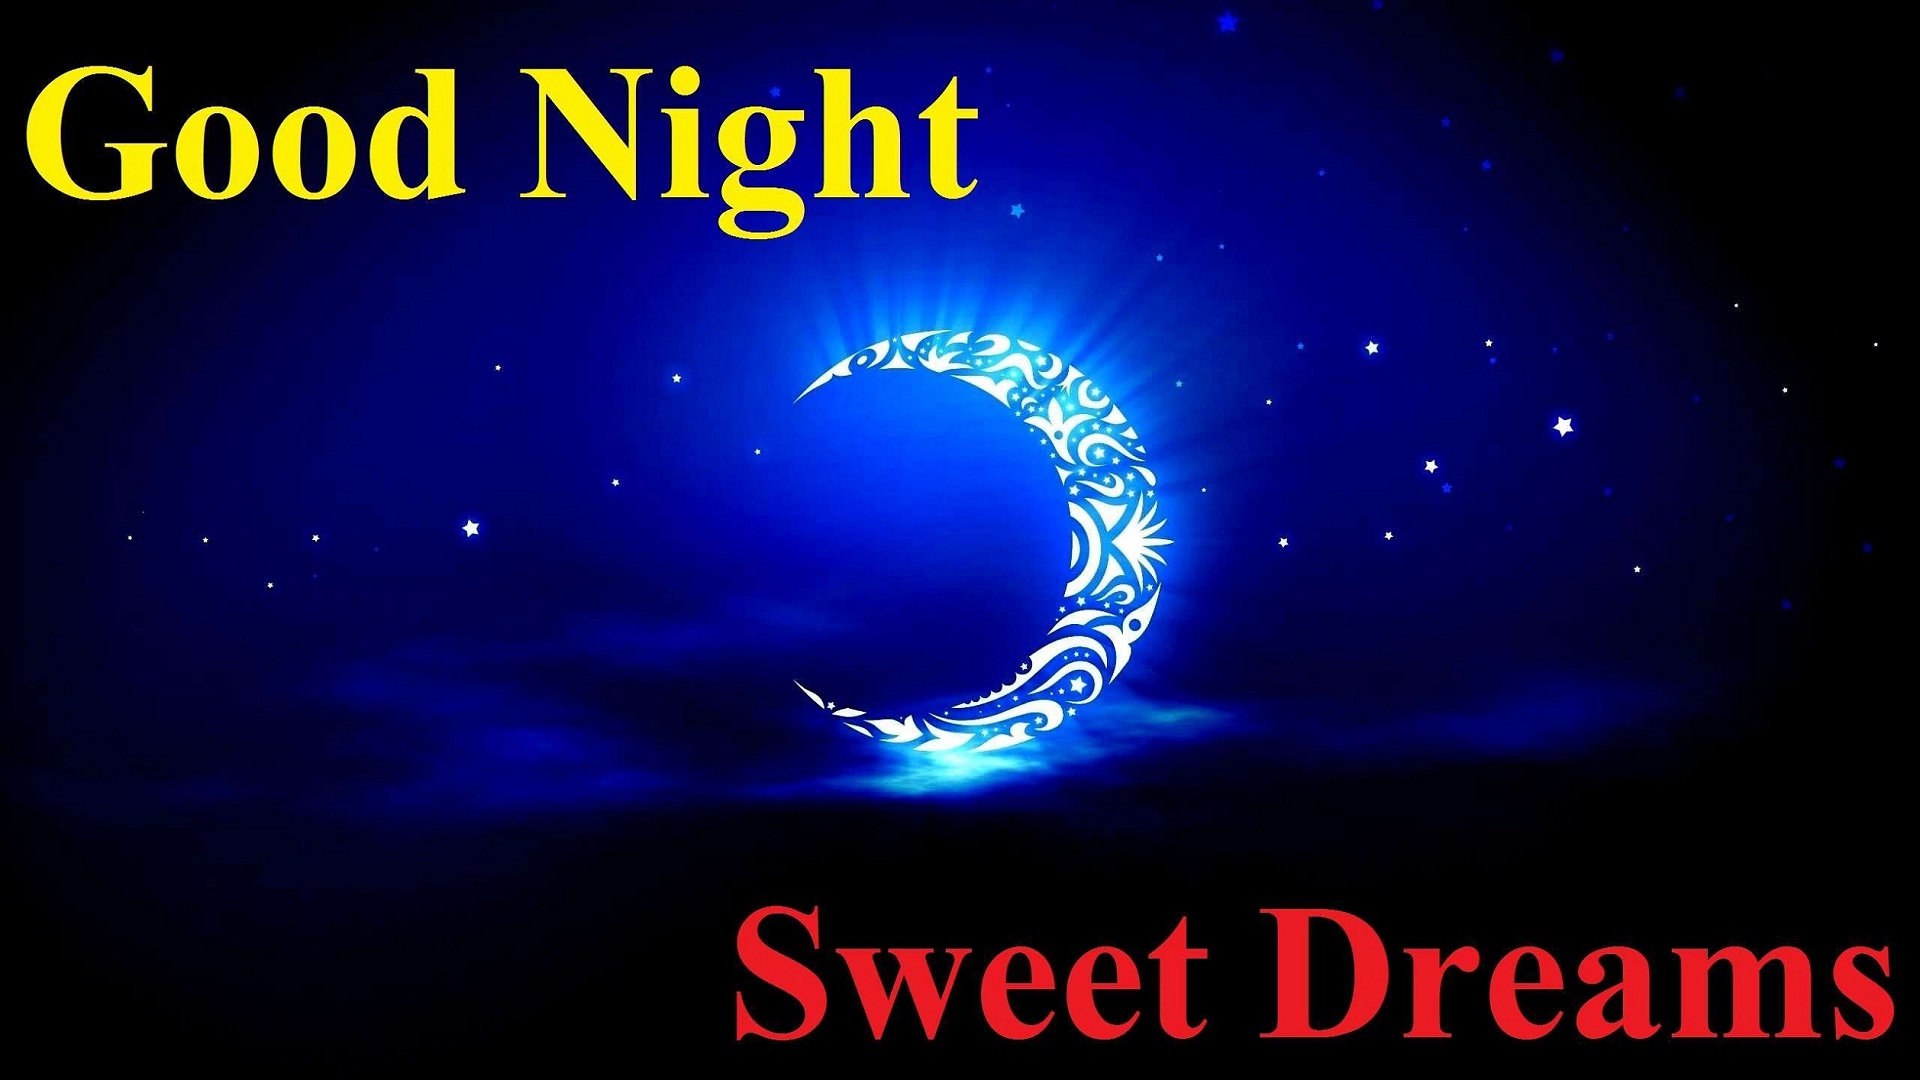 Good Night Sweet Dreams Wishes Wallpaper HD Rocks